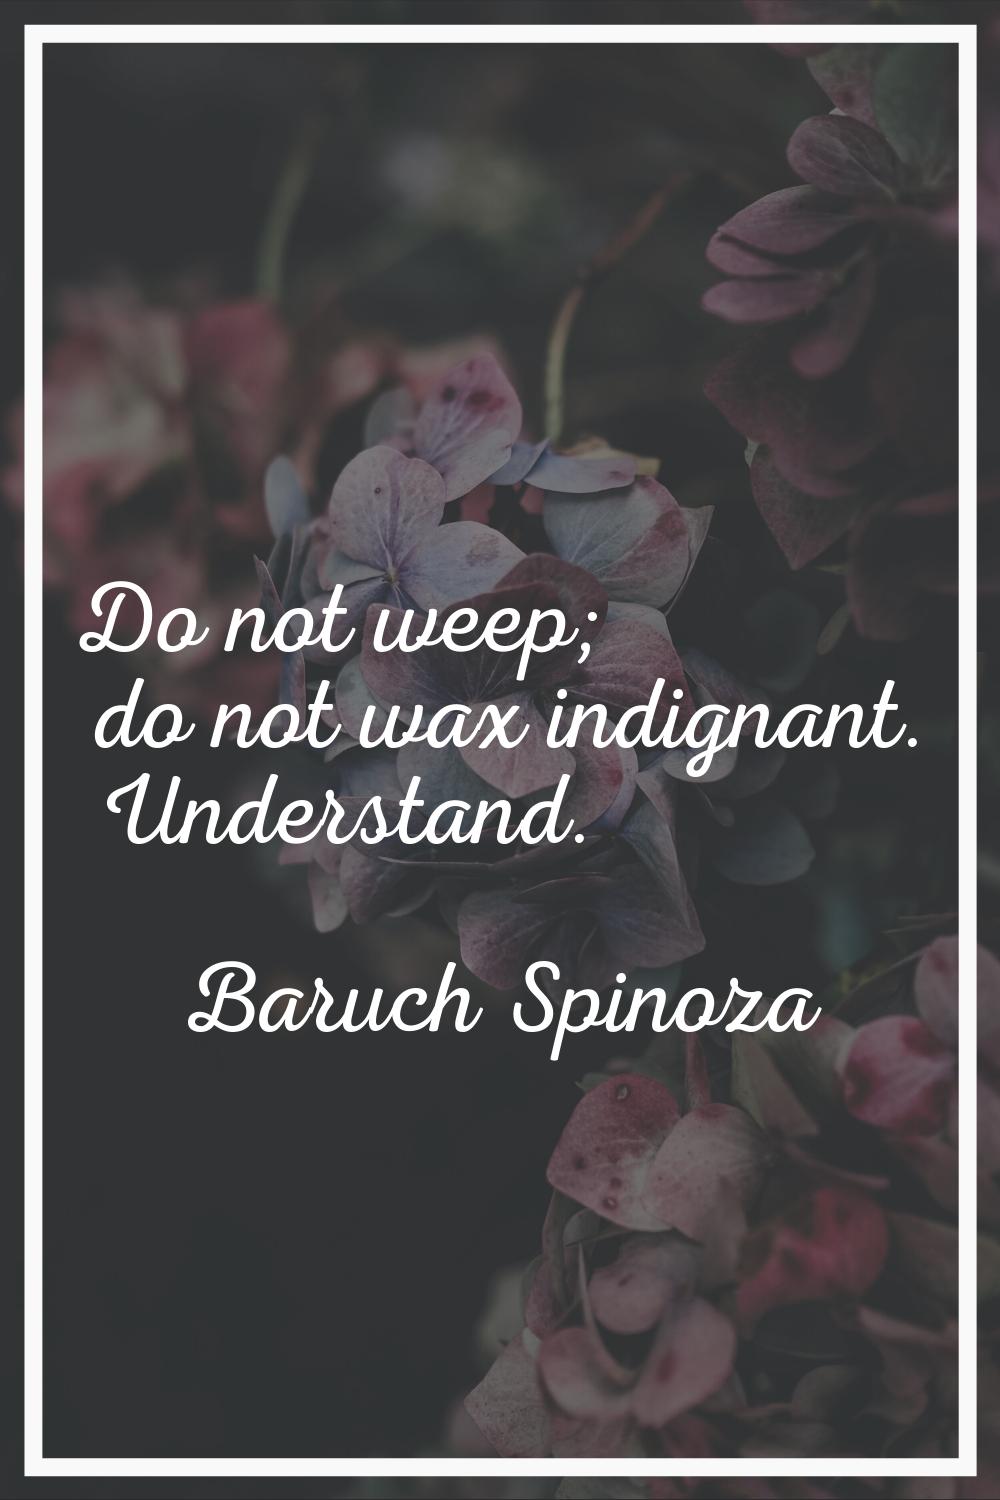 Do not weep; do not wax indignant. Understand.